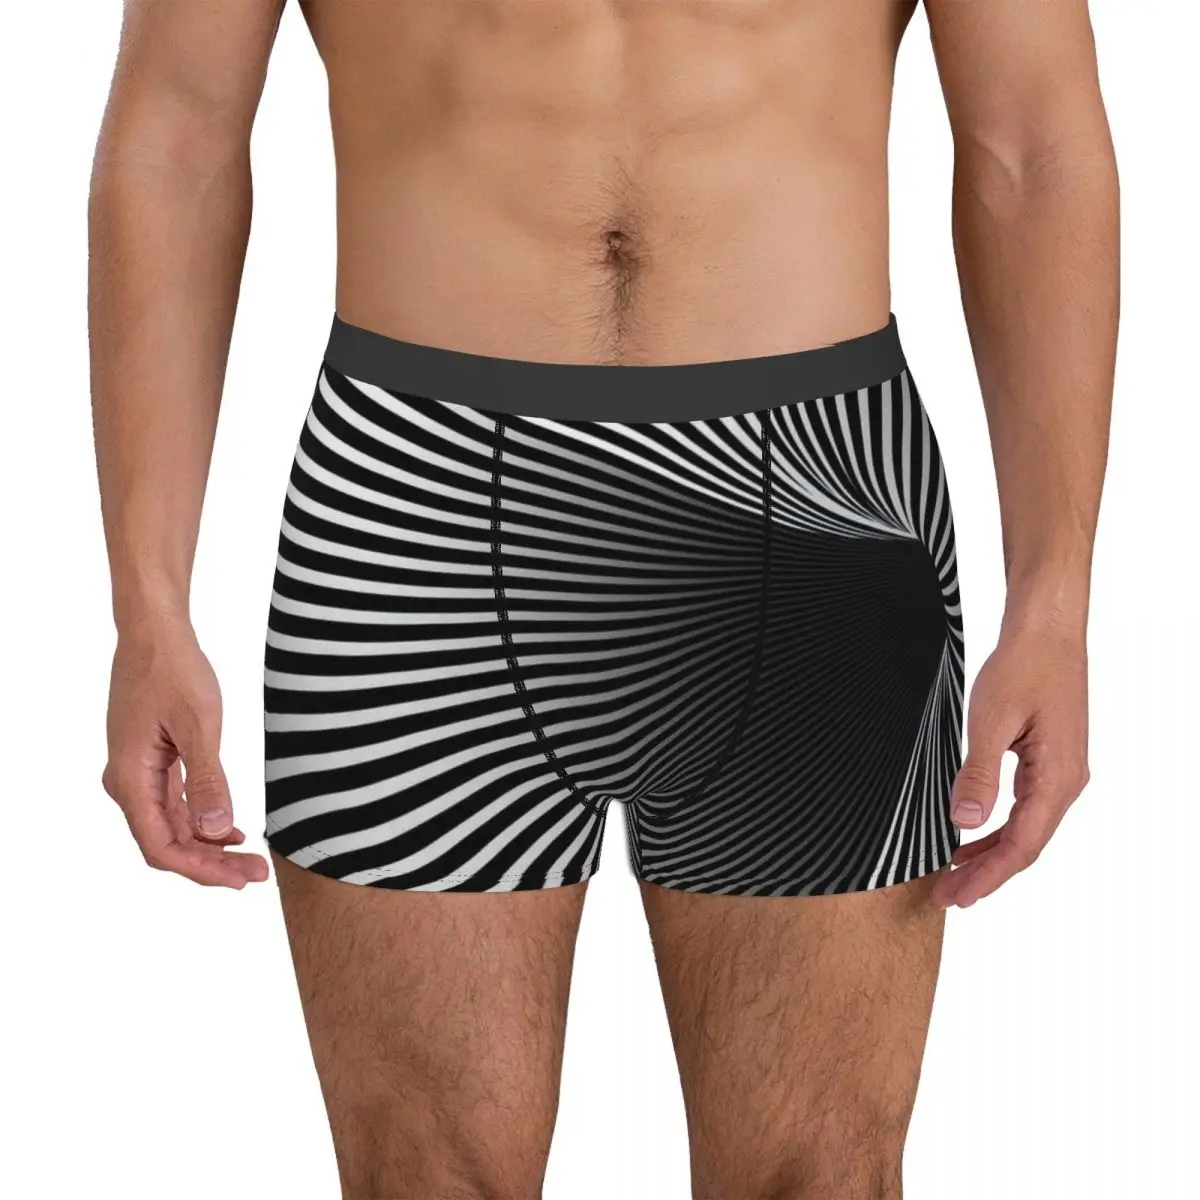 Geometric, And Illusion 3D Monotone Mystery Vortex Underpants Cotton Panties Men's Underwear Ventilate Shorts